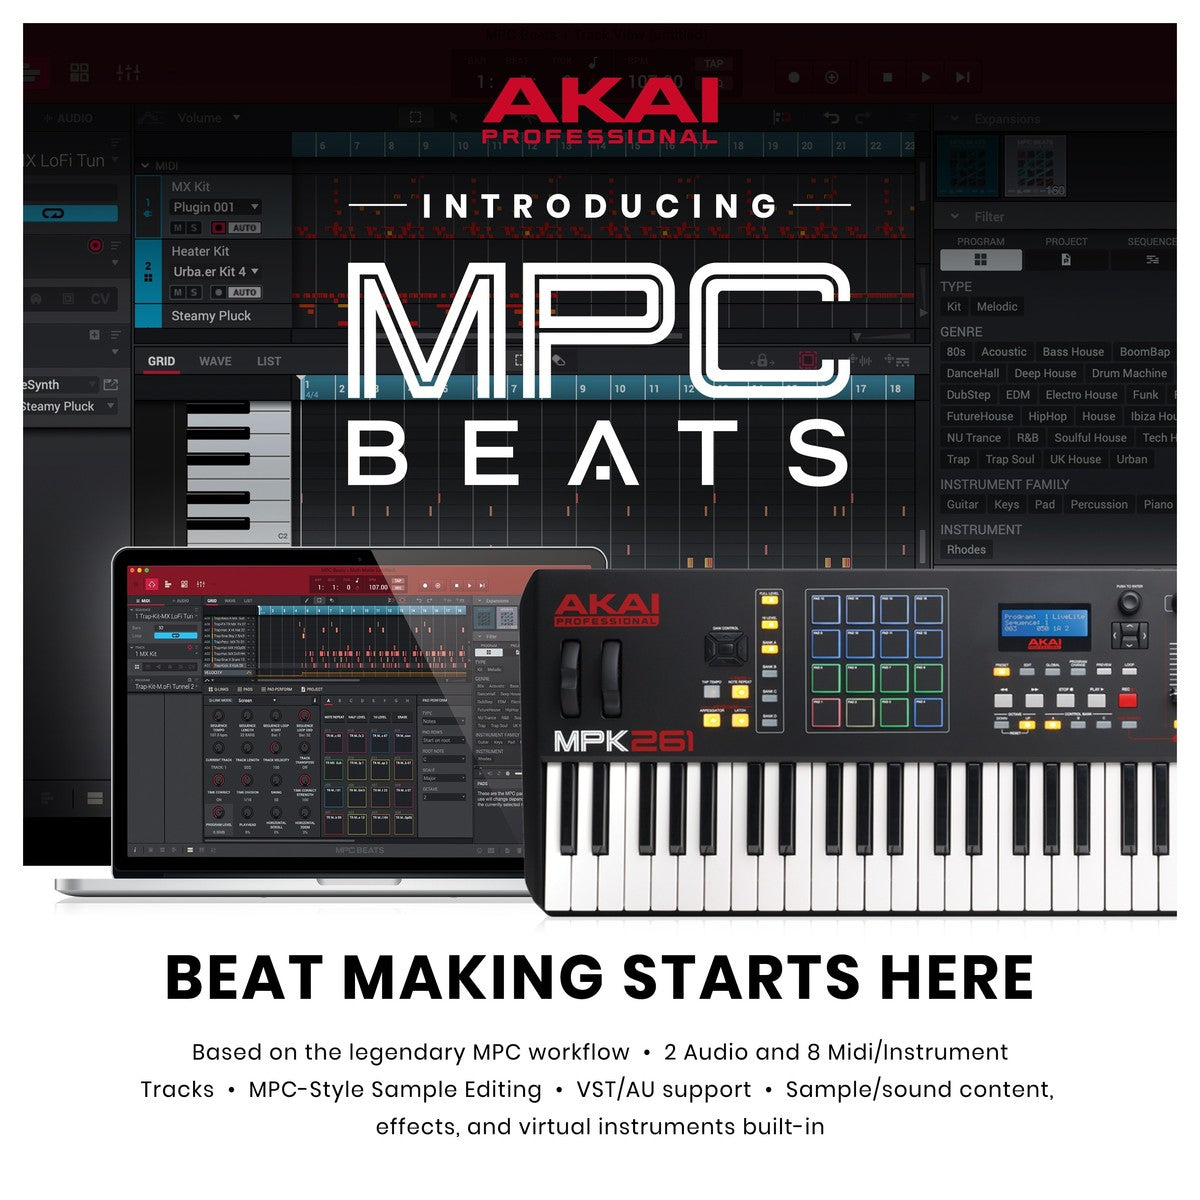 MIDI Keyboard Controller Akai MPK261 - Việt Music